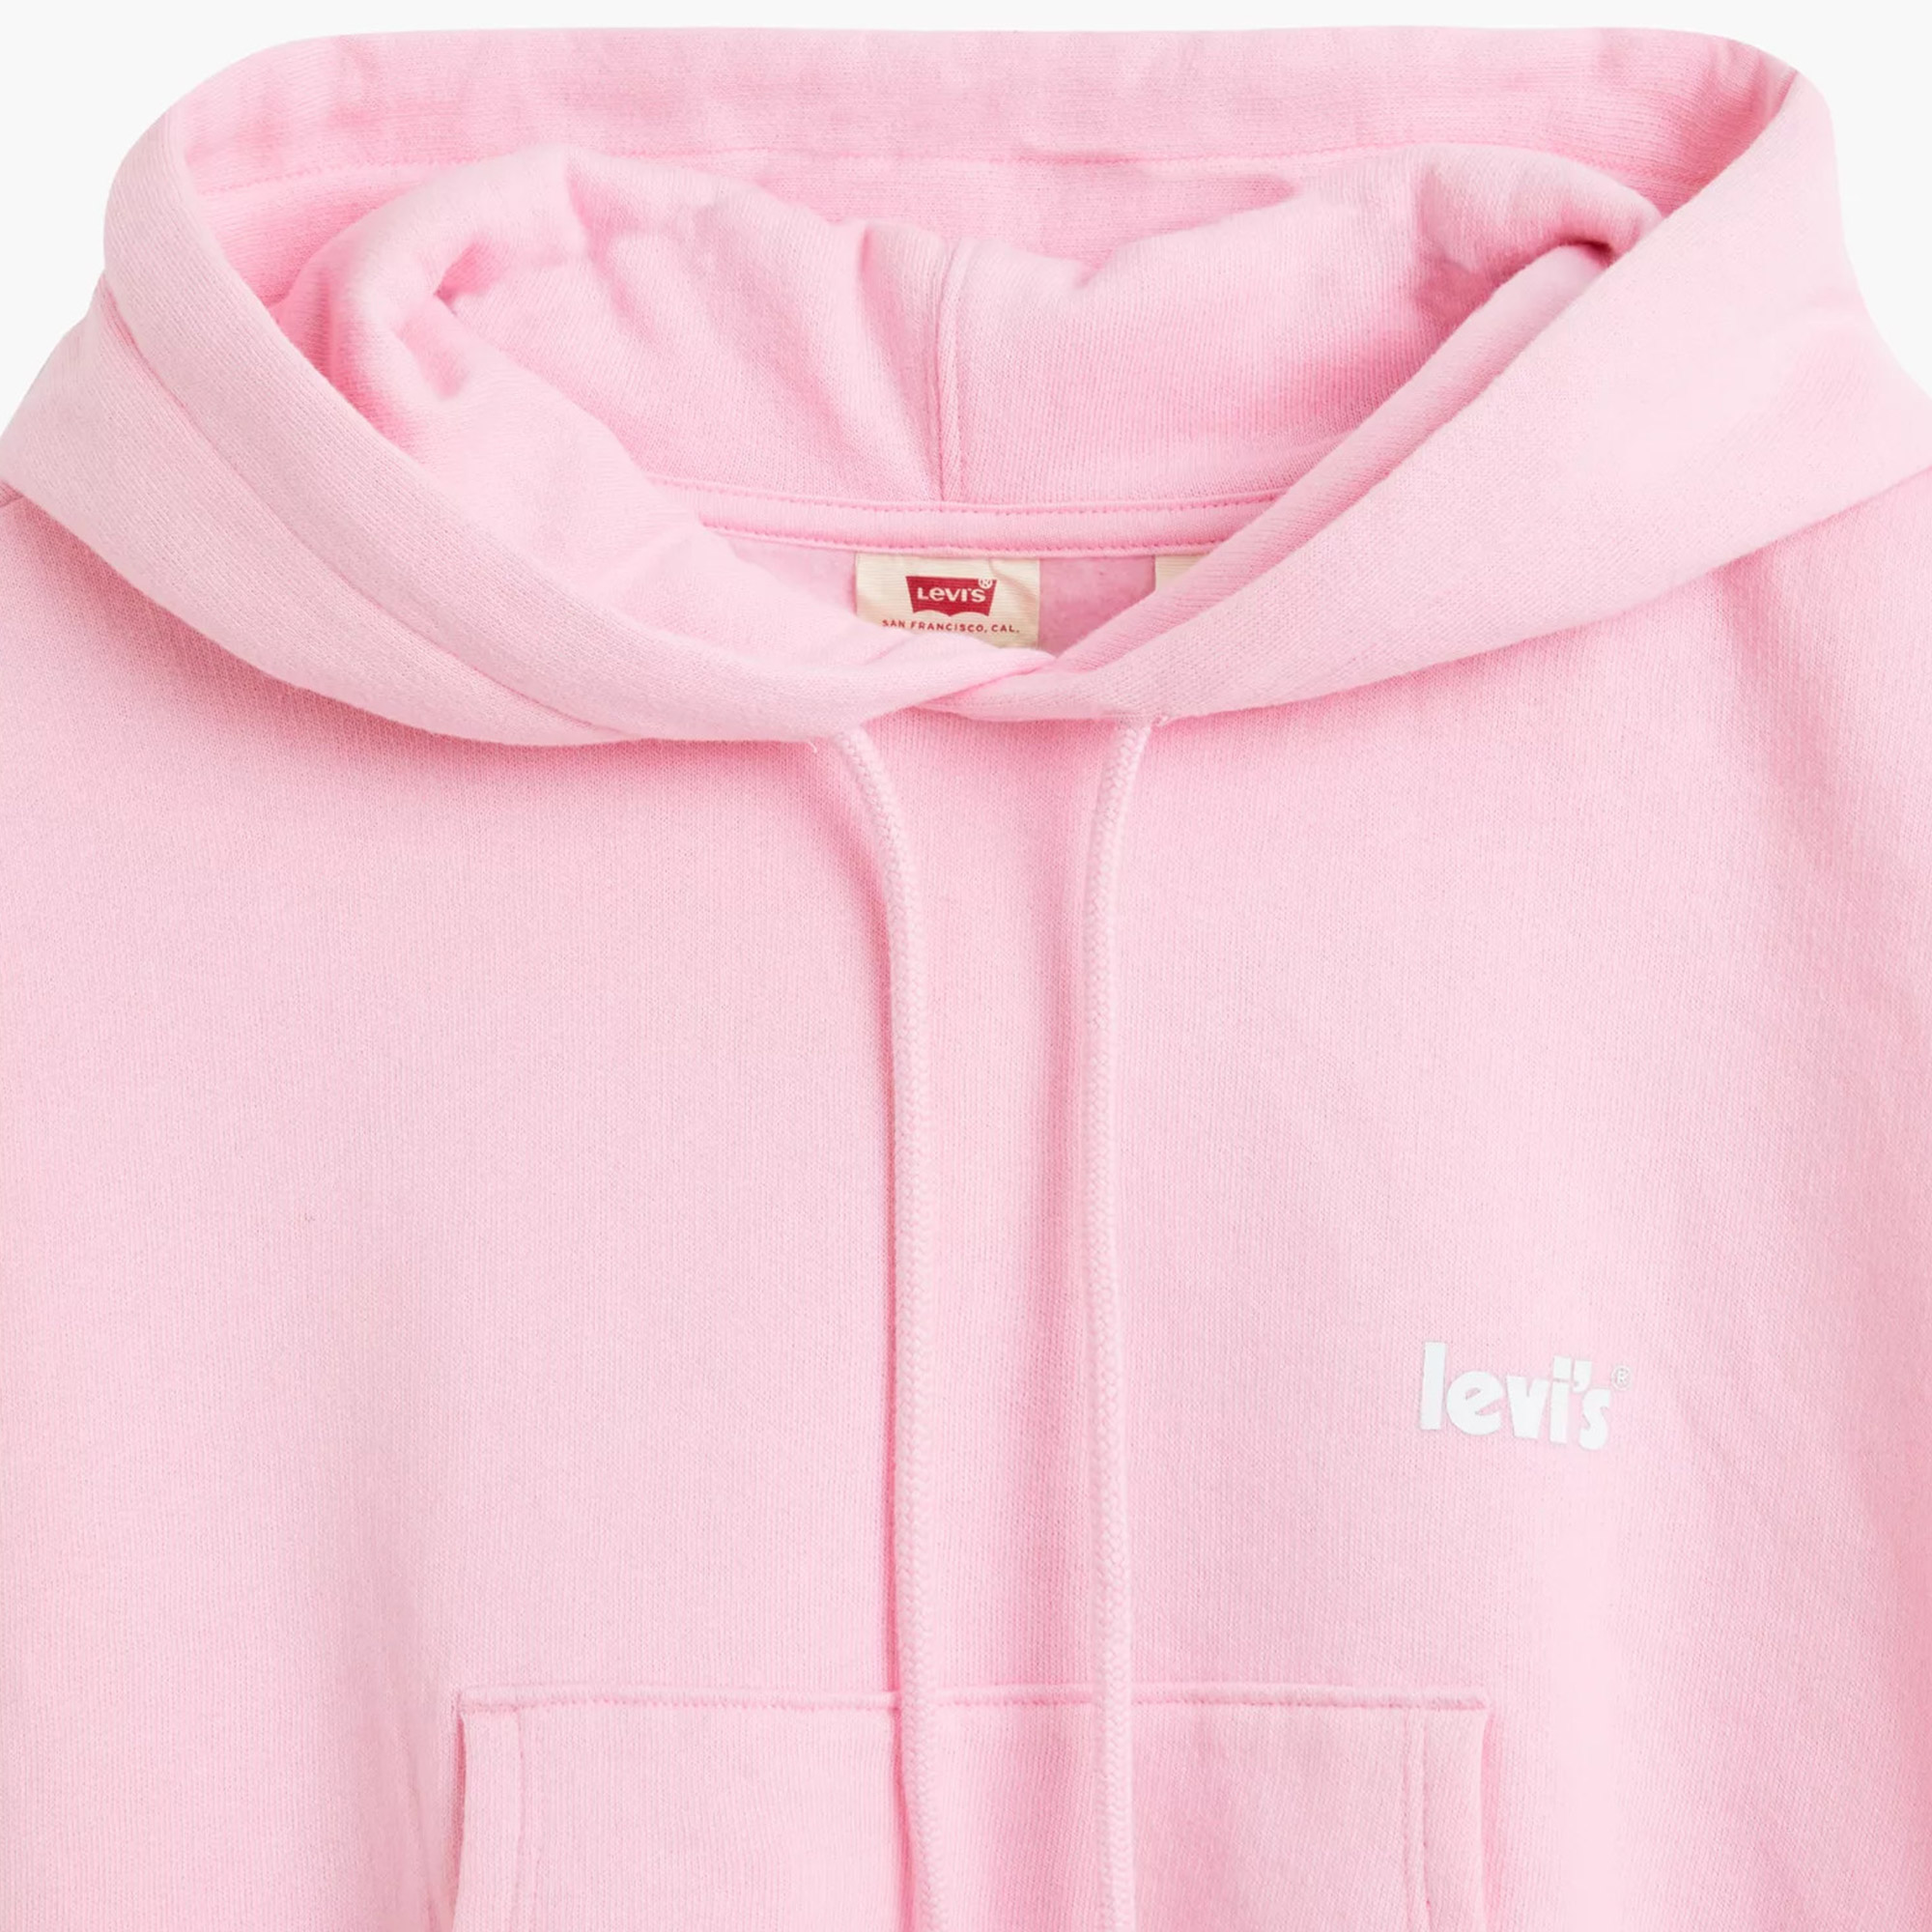 Sweatshirt Levis Laundry Day Sweatshirt Pink for Woman | A1782-0010 |  